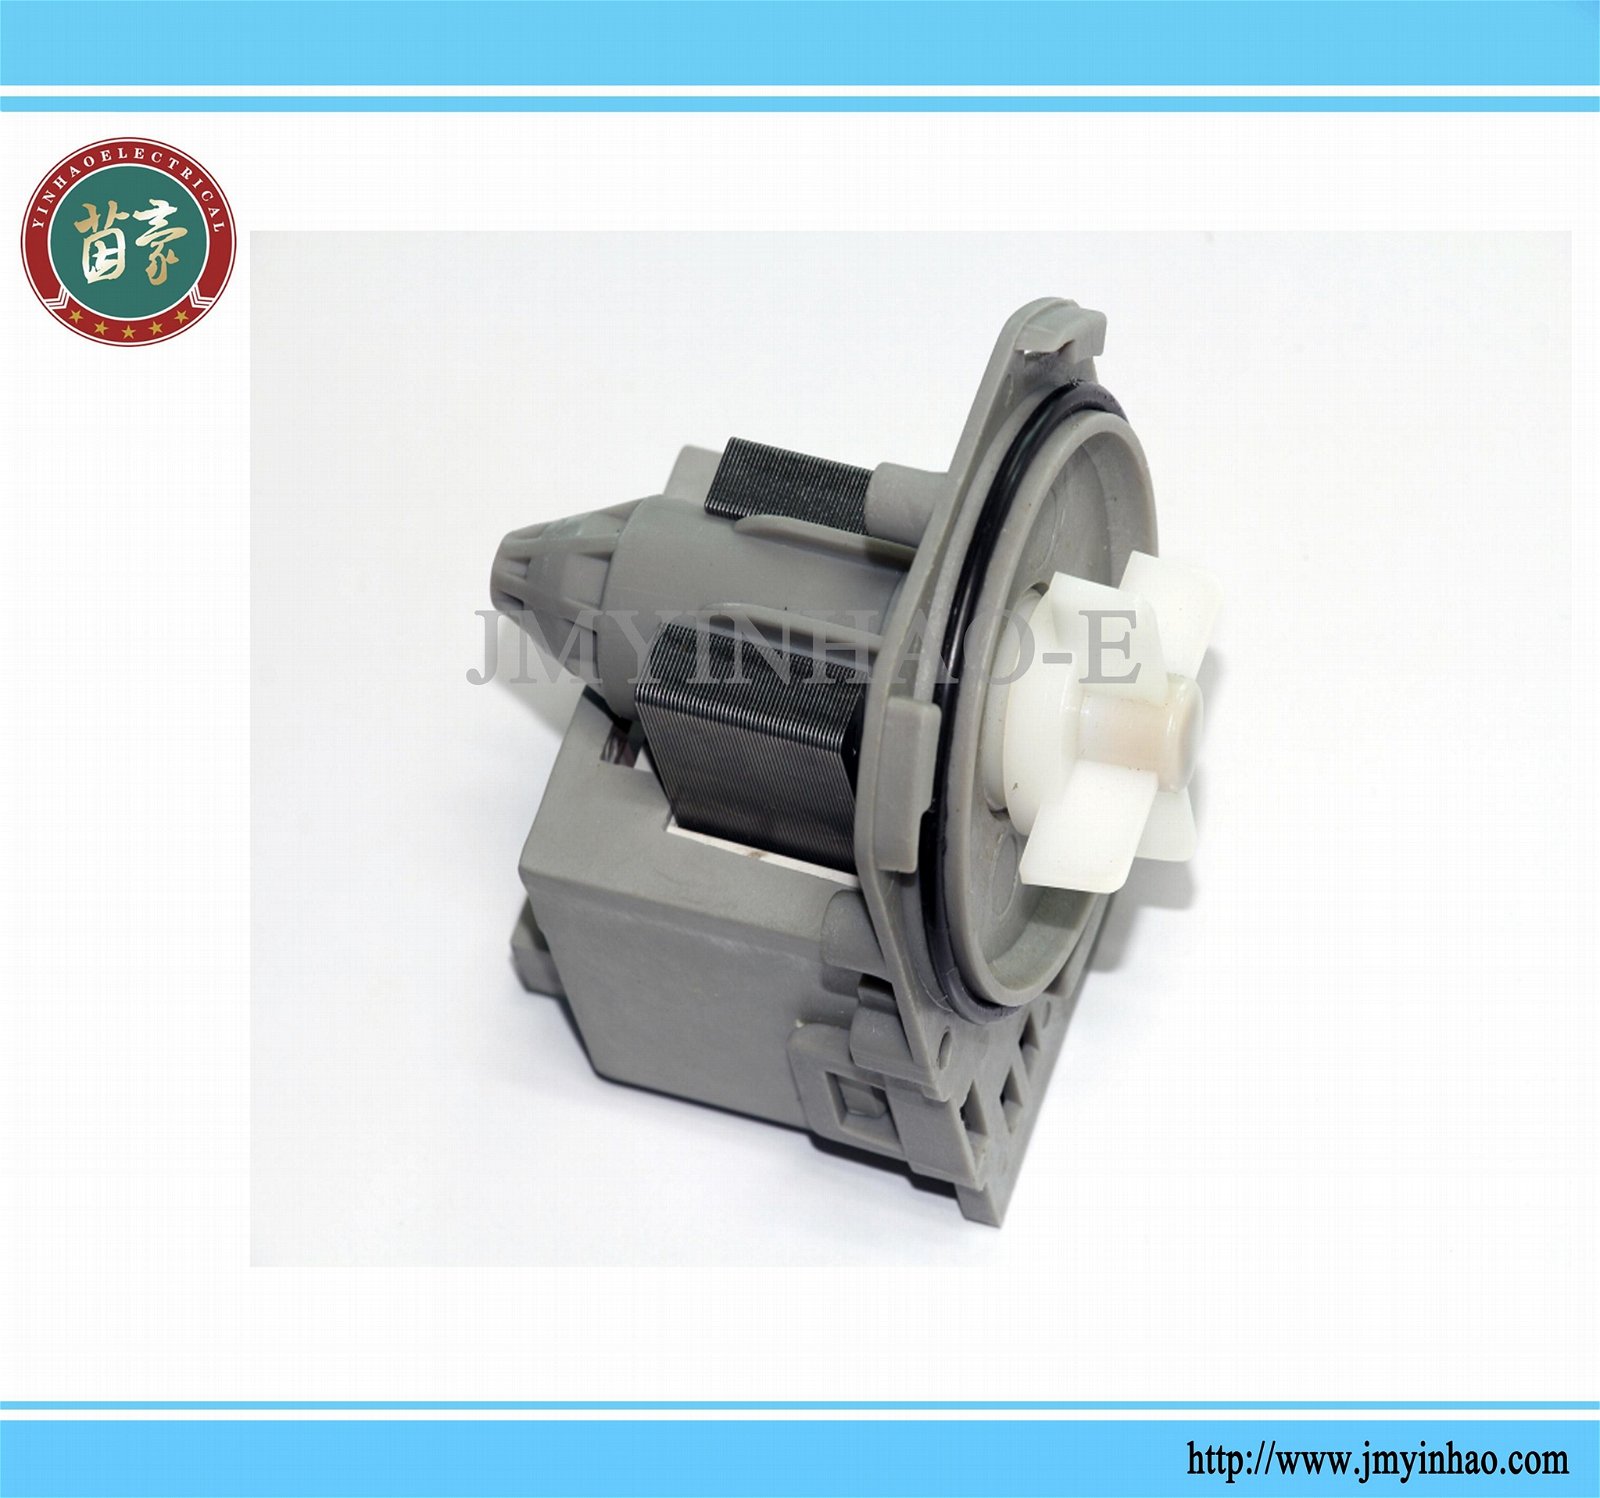 drain water pump for washing machine 220V/120V - China - Manufacturer